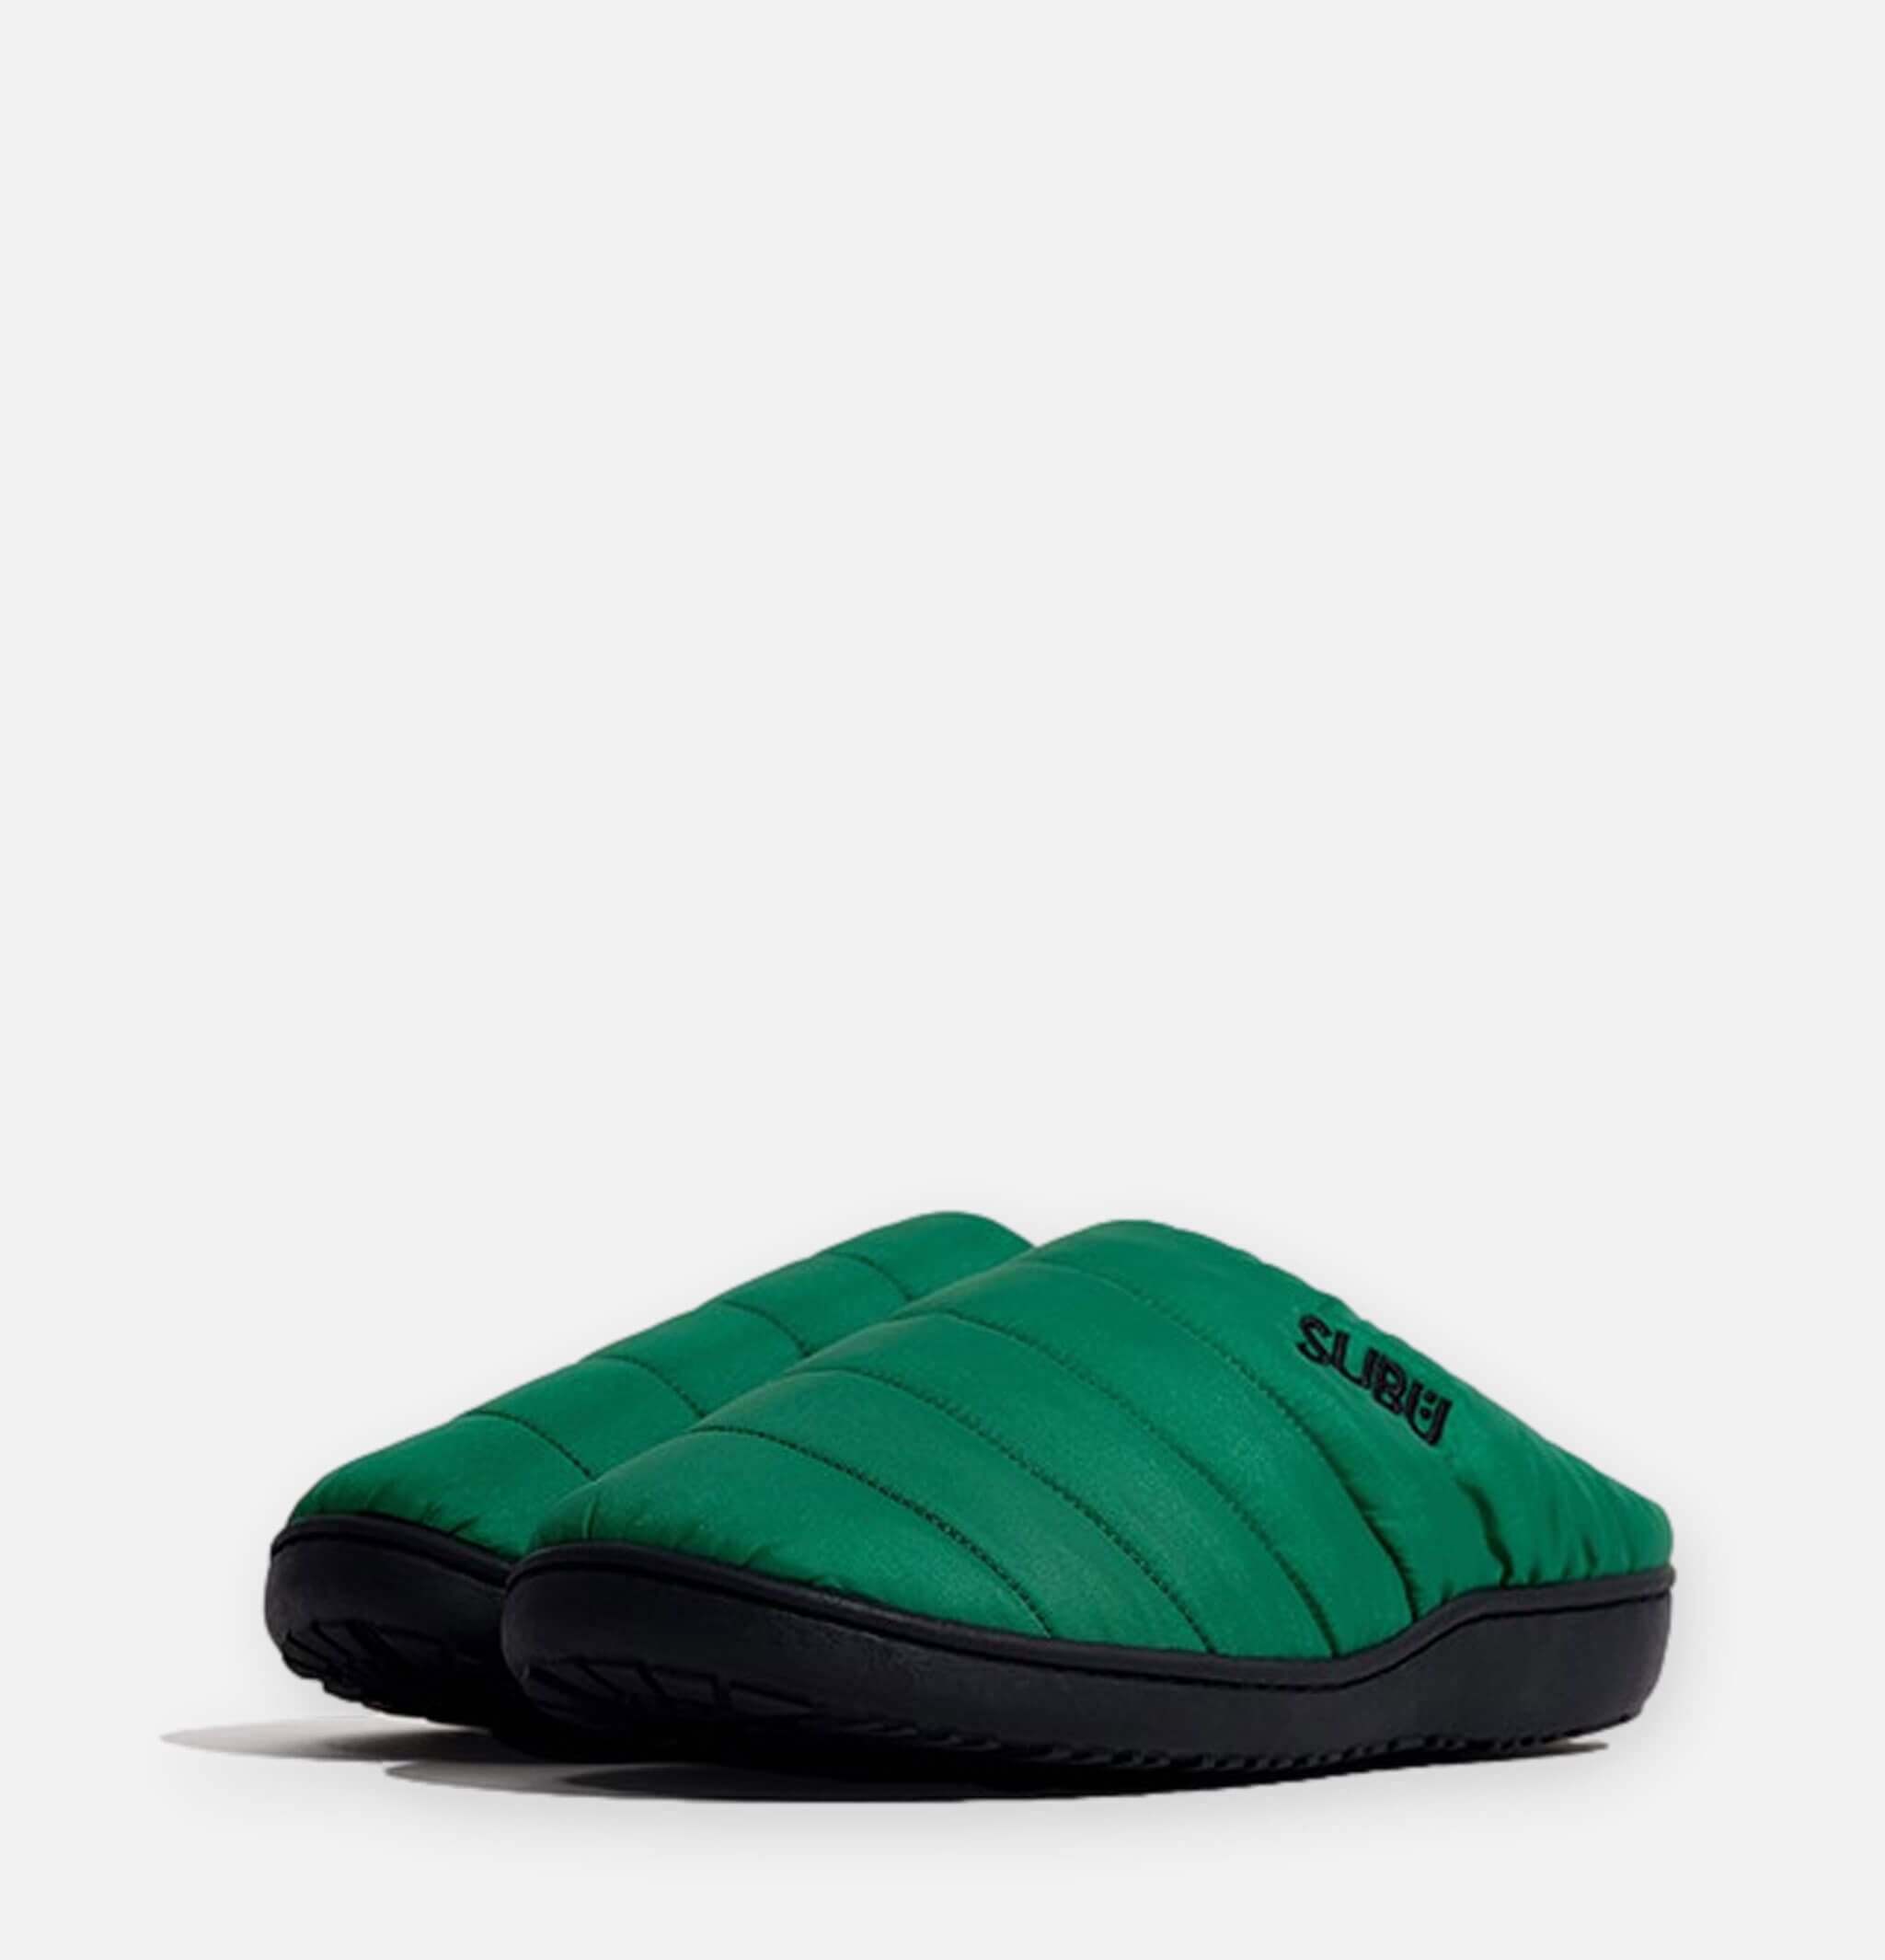 Unevenless Slippers Artificial Green